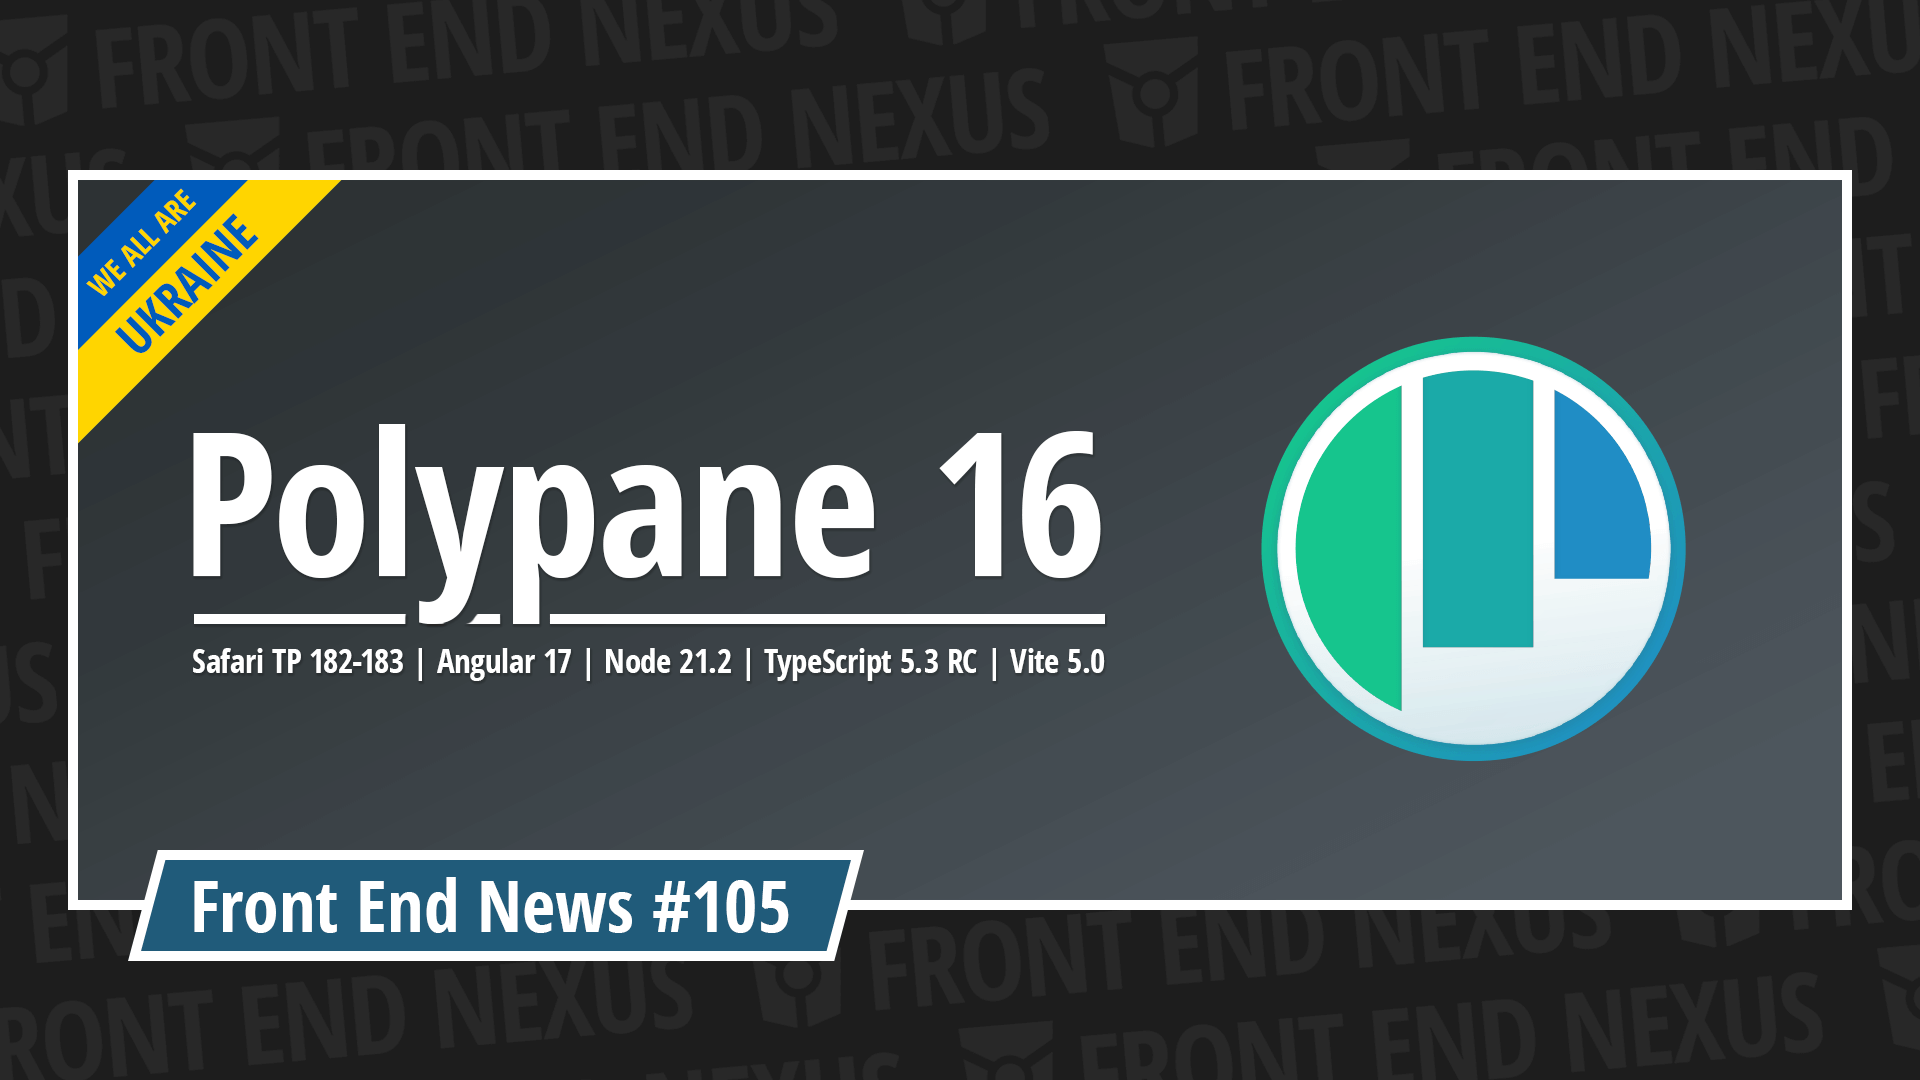 Polypane 16, Safari TP 182-183, Angular 17, Node 21.2, TypeScript 5.3 RC, Vite 5.0, and more | Front End News #105